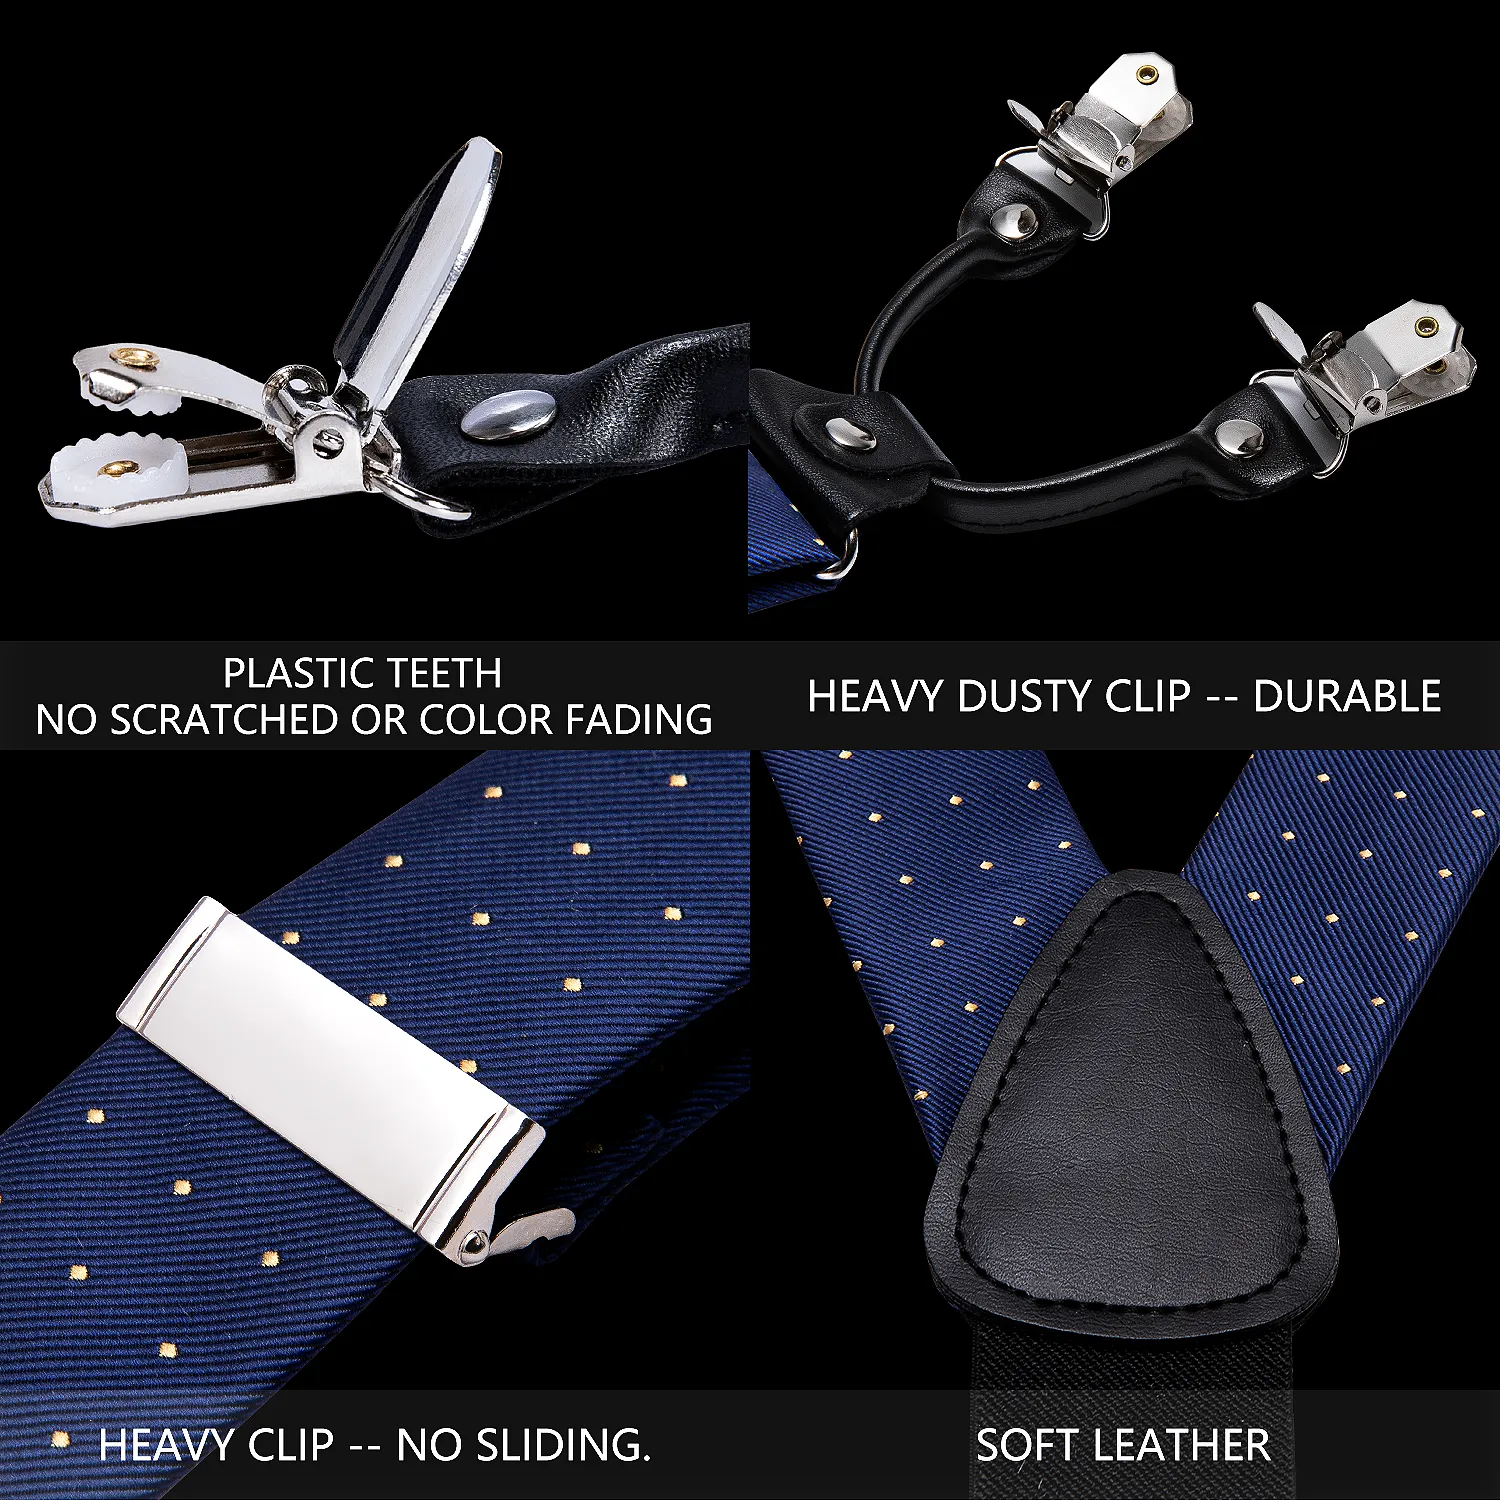 Bretelle di seta YBack regolabili con punto moda blu Set cravatta uomo Festa nuziale YShape 6 Bretelle con clip BarryWang1615794